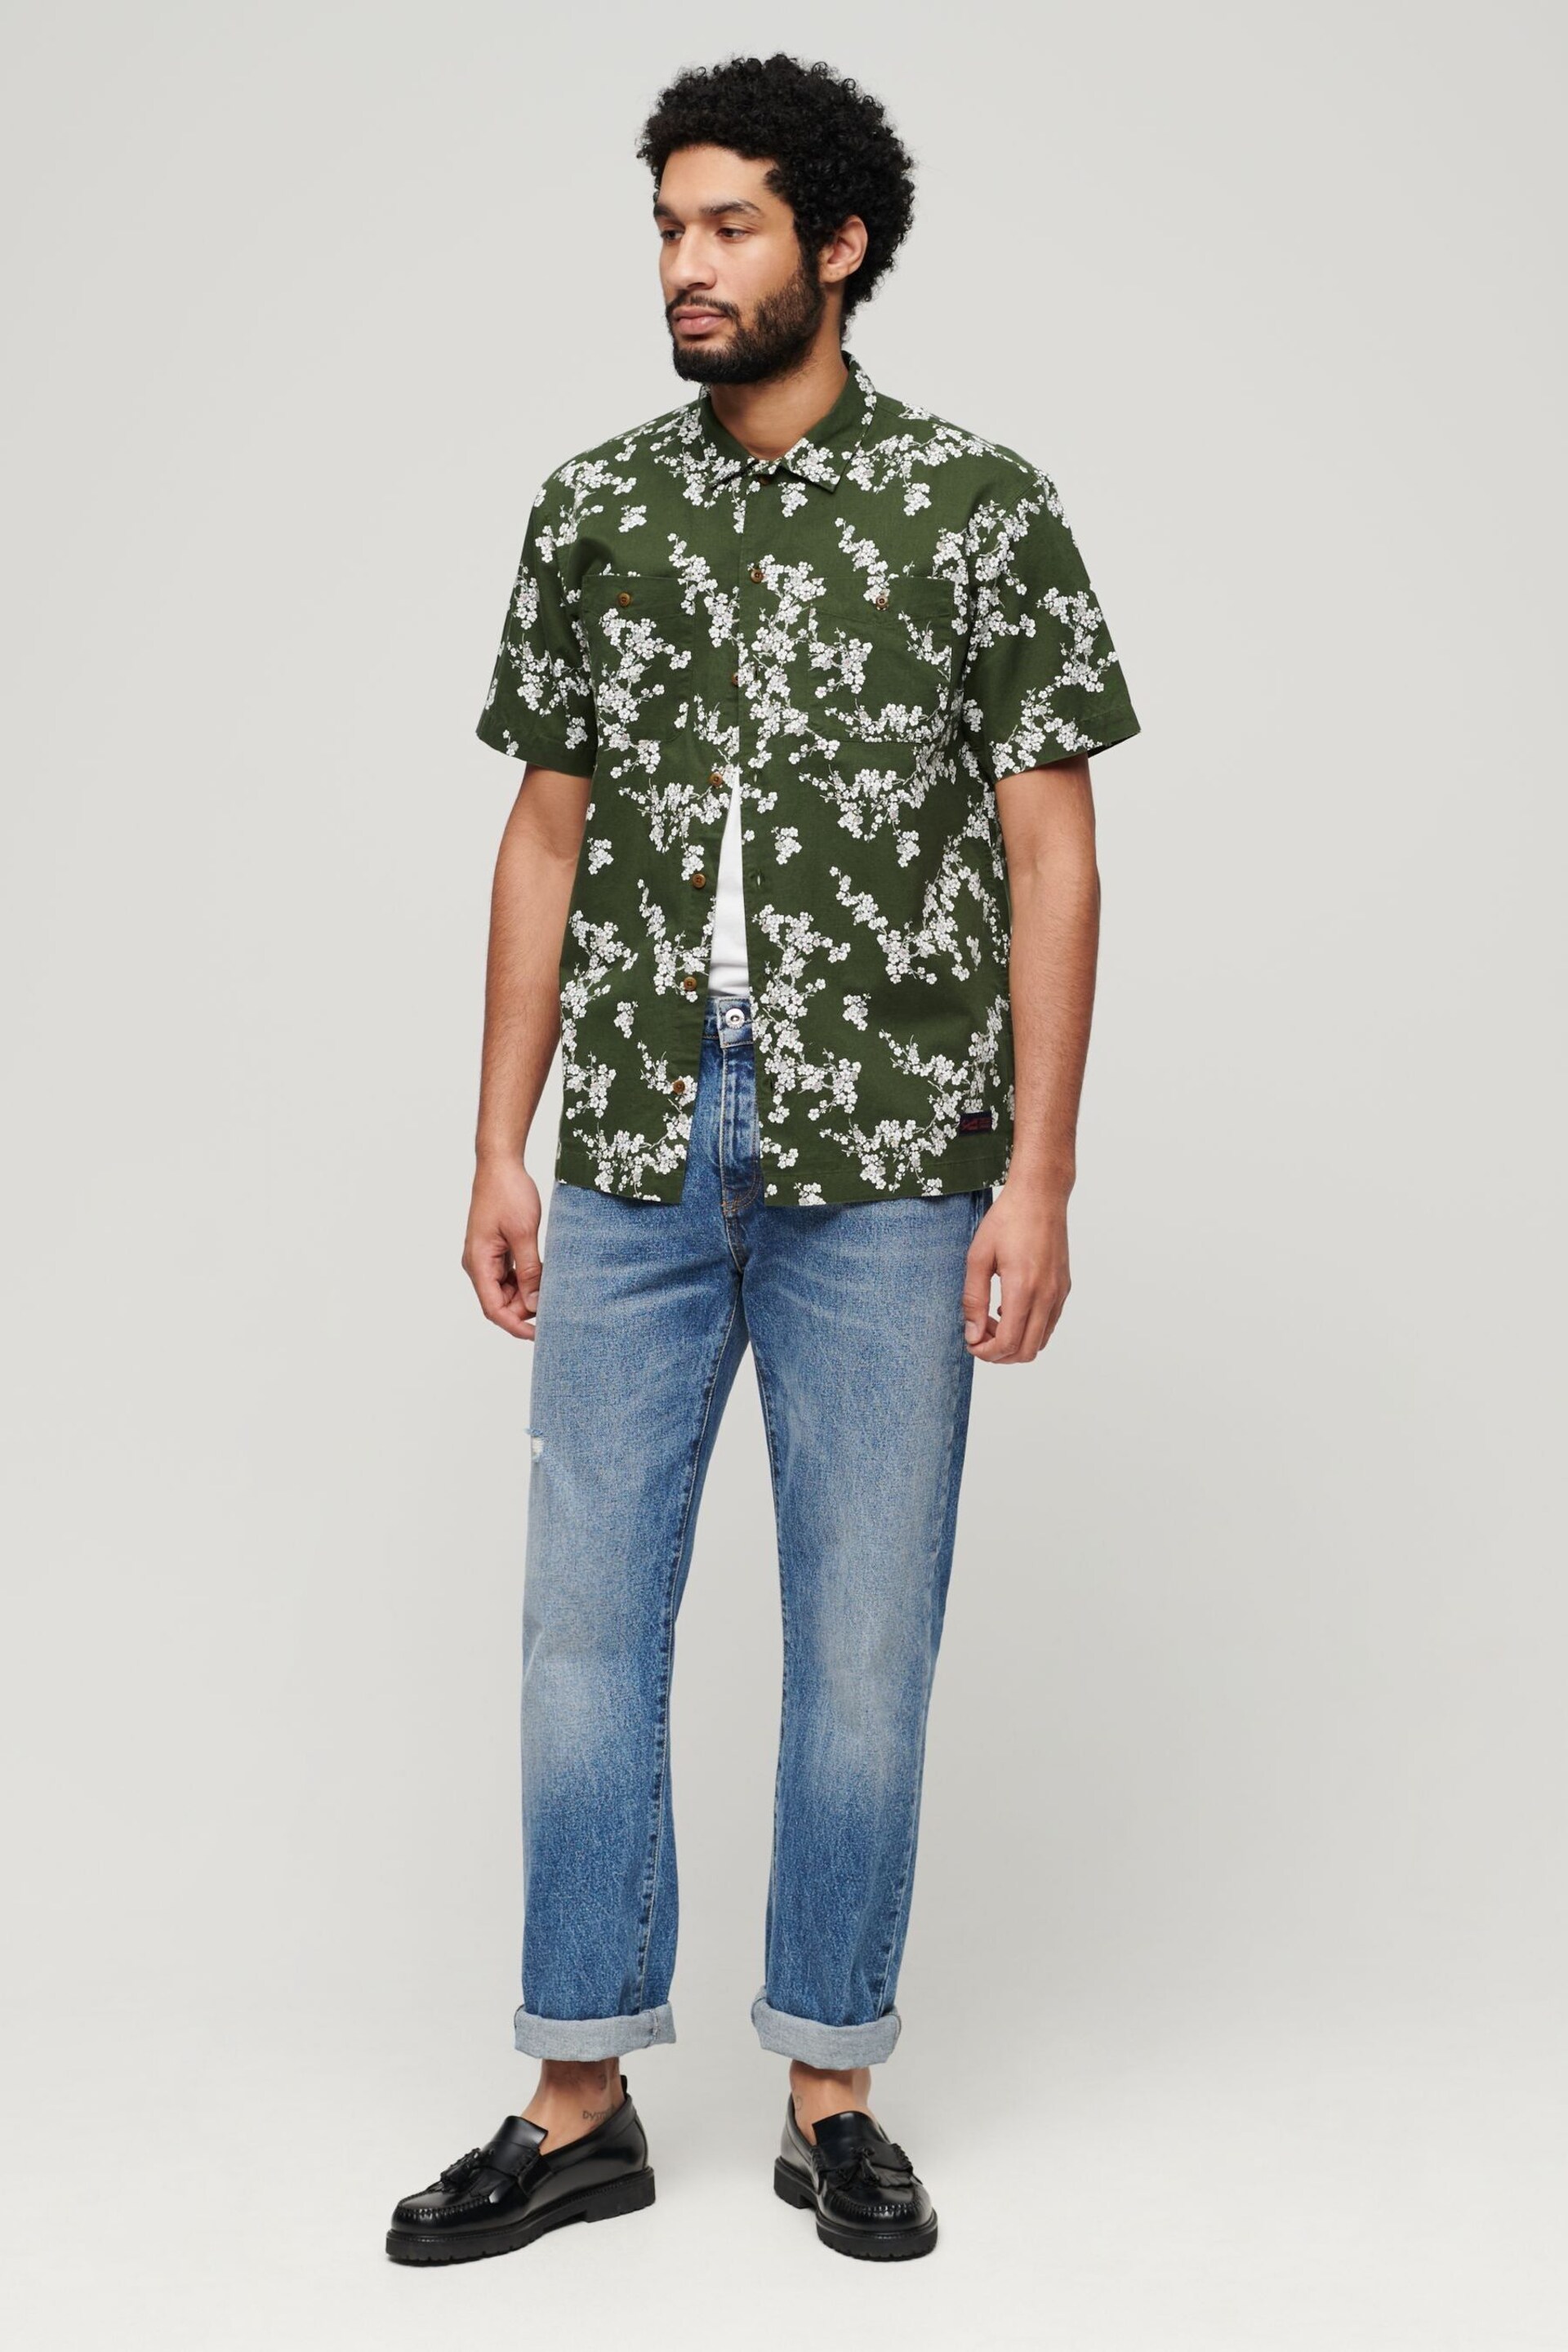 Superdry Green Short Sleeved Beach Shirt - Image 3 of 6